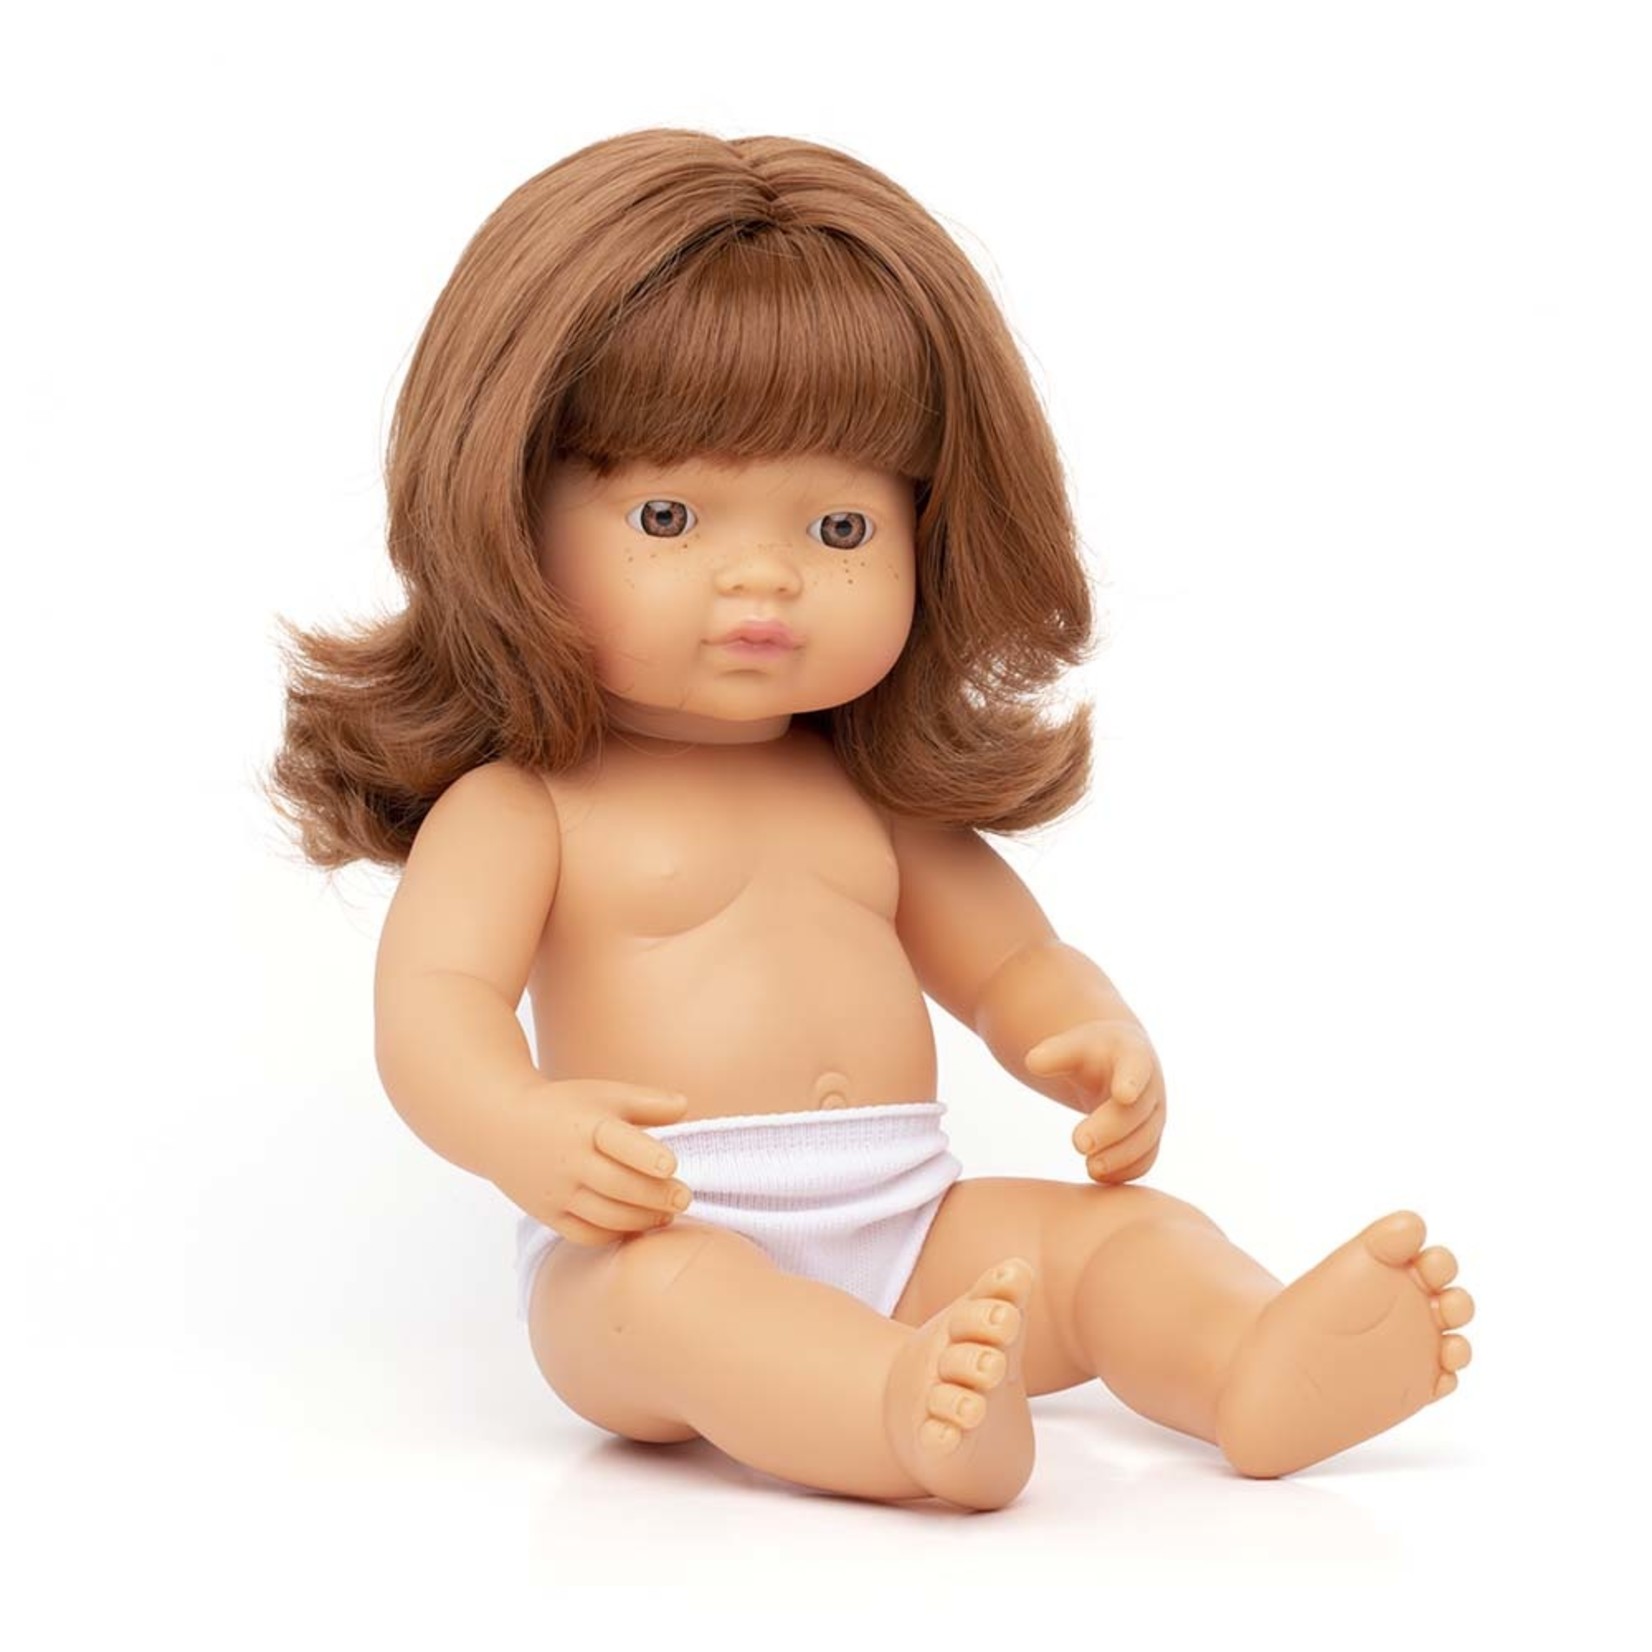 miniland 15" redhead baby doll